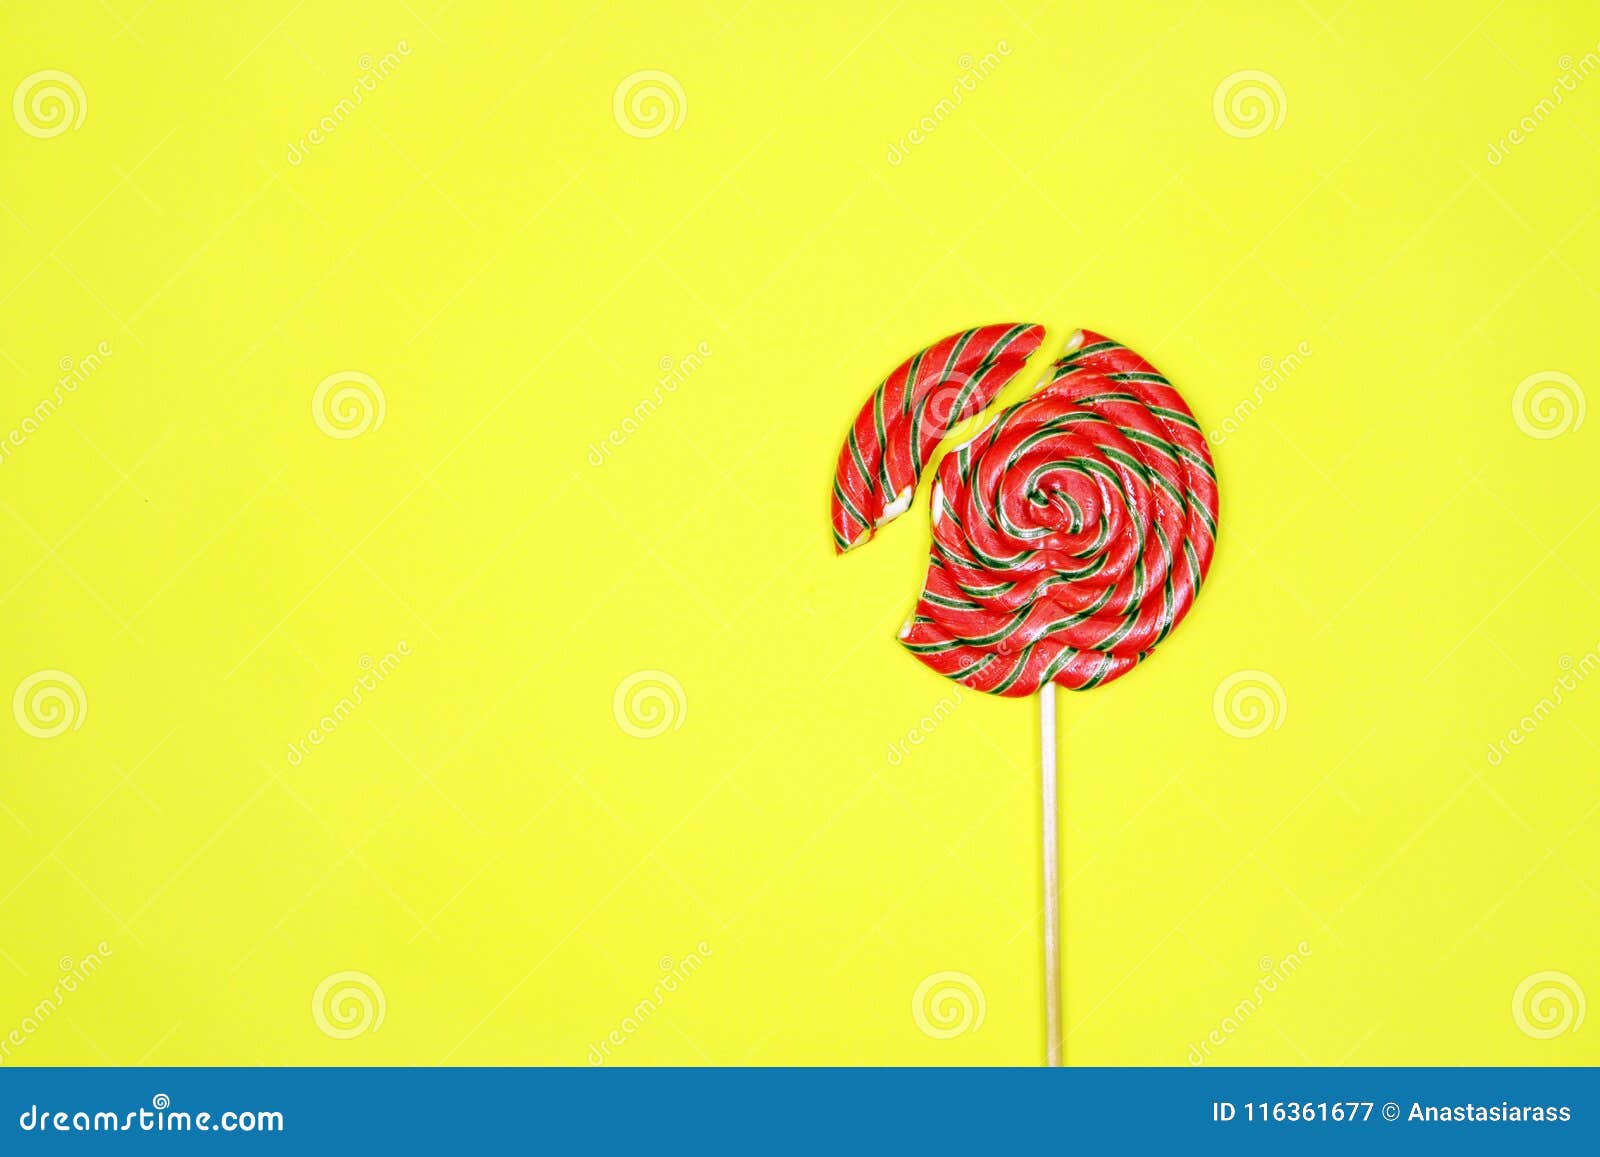 Broken Lollipop On Yellow Background Stock Image - Image of conceptual ...